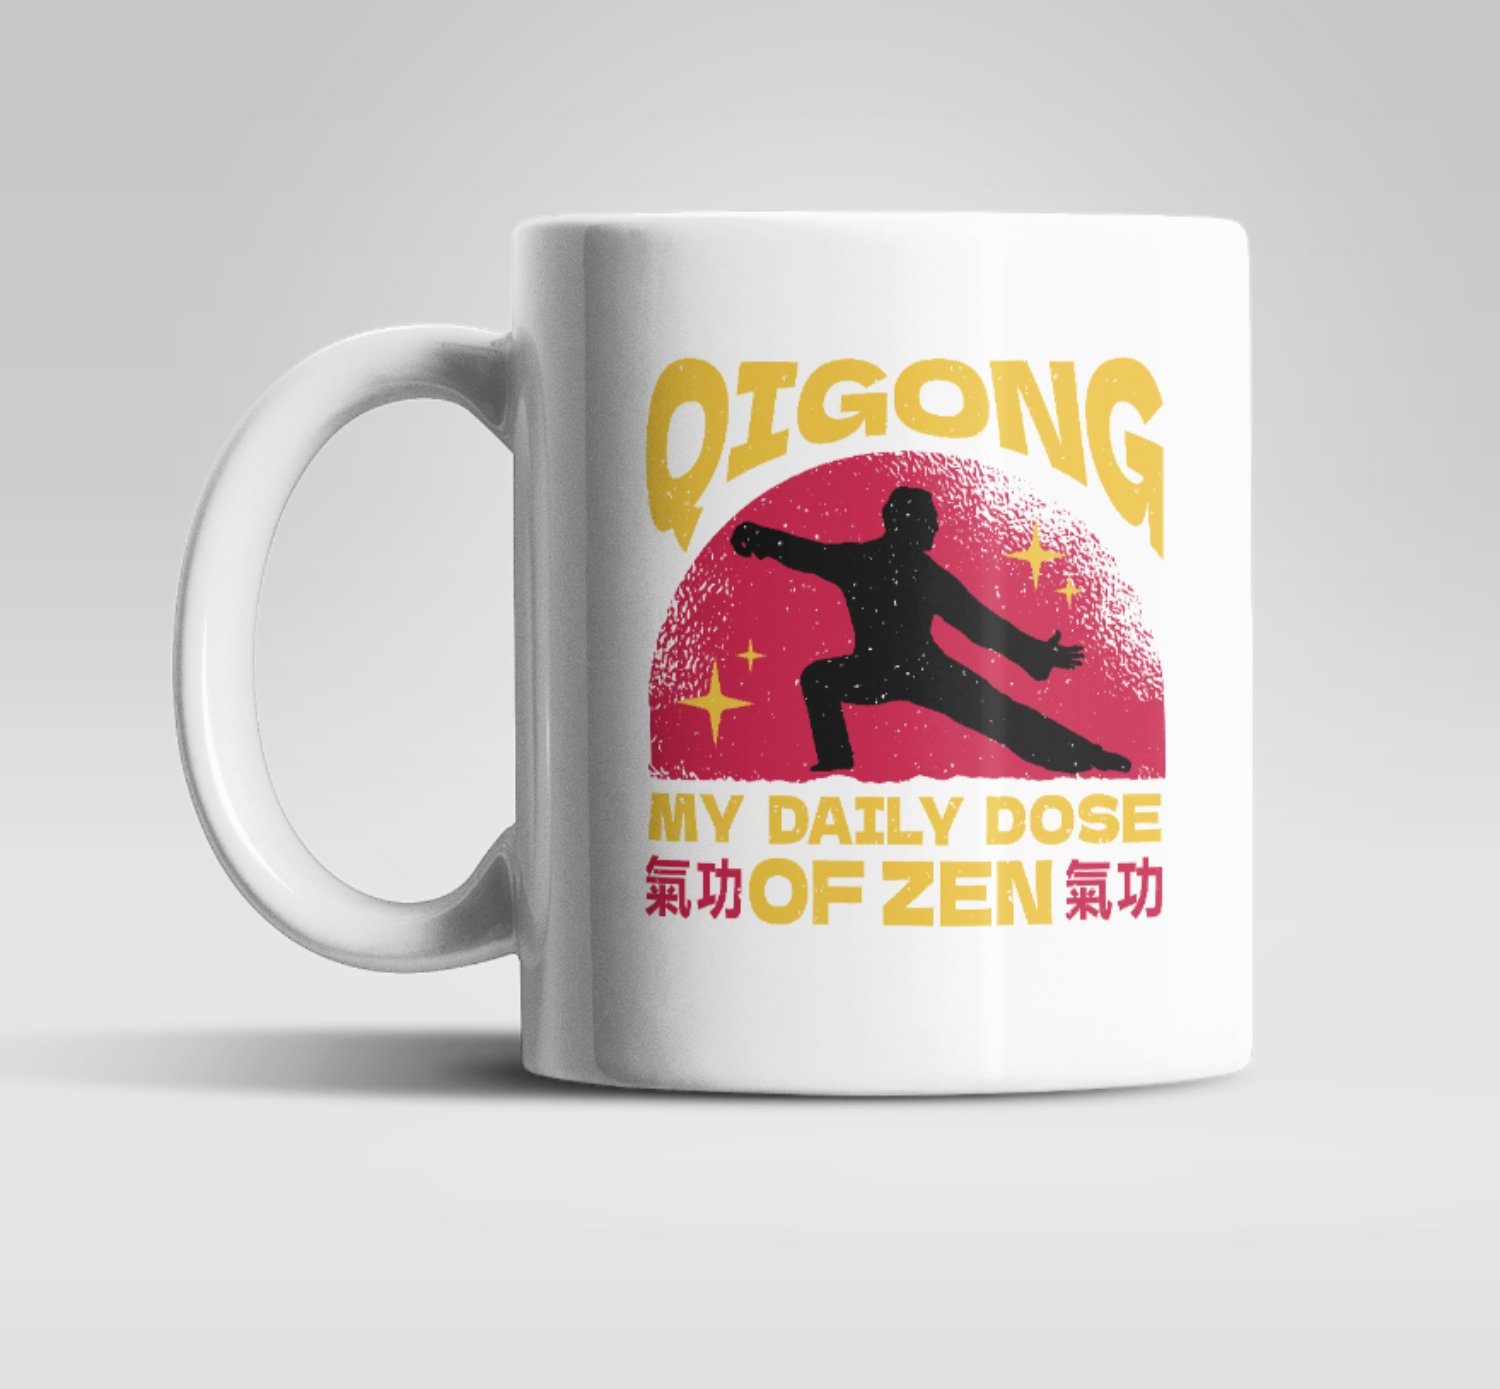 Qigong ml 330 WS-Trend Geschenkidee, Teetasse Keramik, Tasse Kaffeetasse Antistress